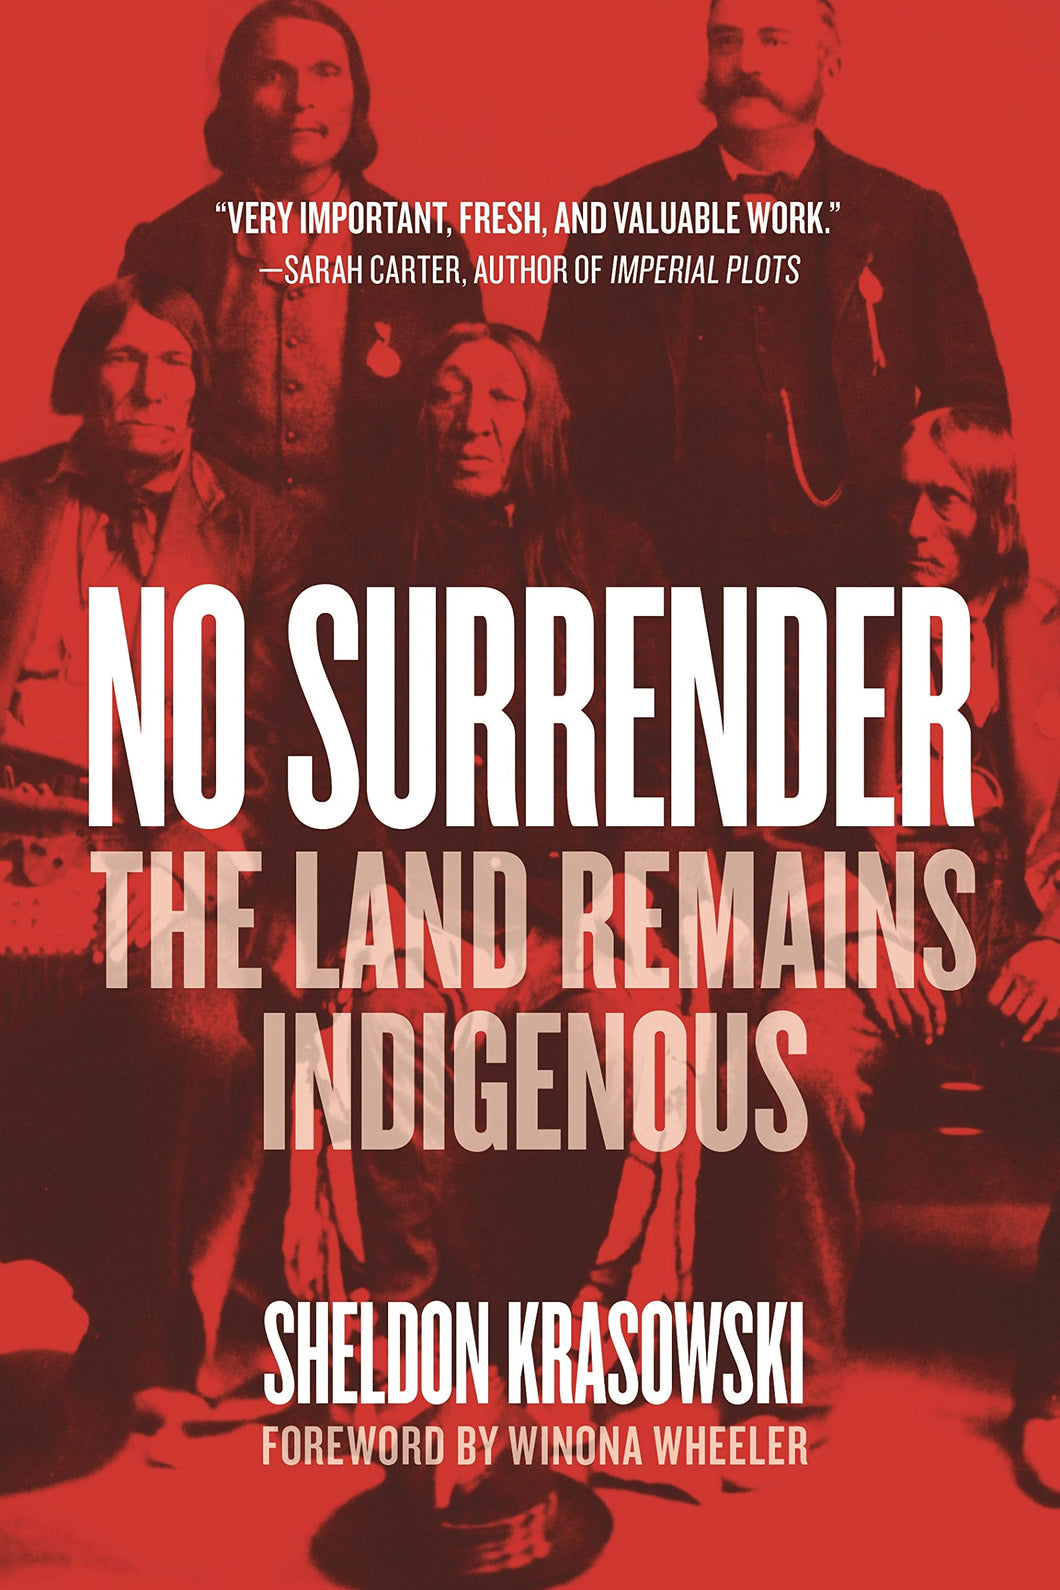 No Surrender: The Land Remains Indigenous [Sheldon Krasowski]